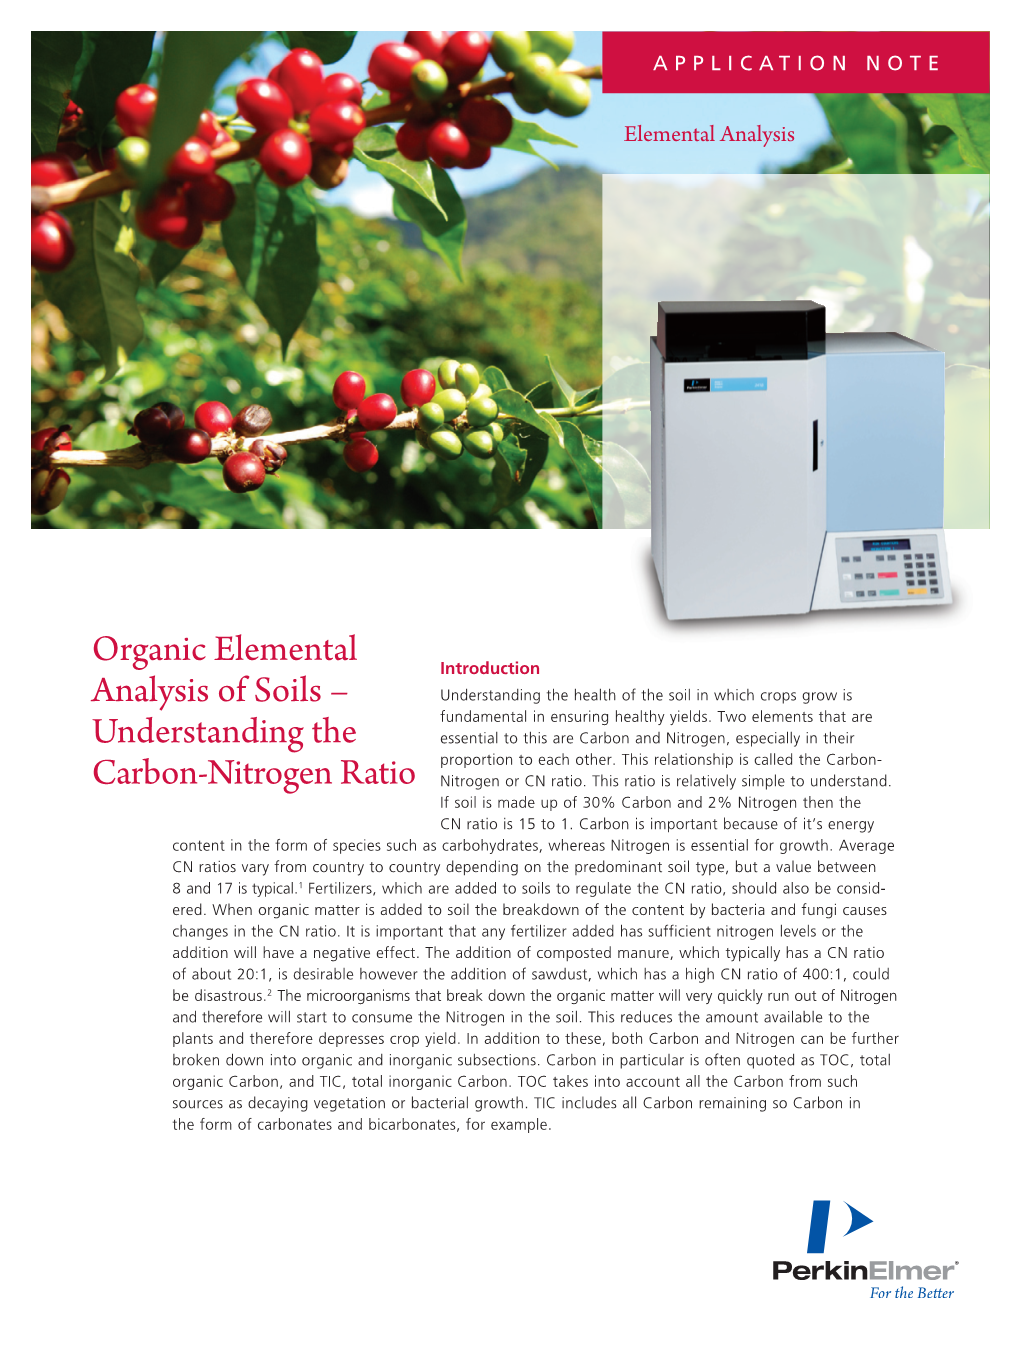 Organic Elemental Analysis of Soils -- Understanding the Carbon-Nitrogen Ratio